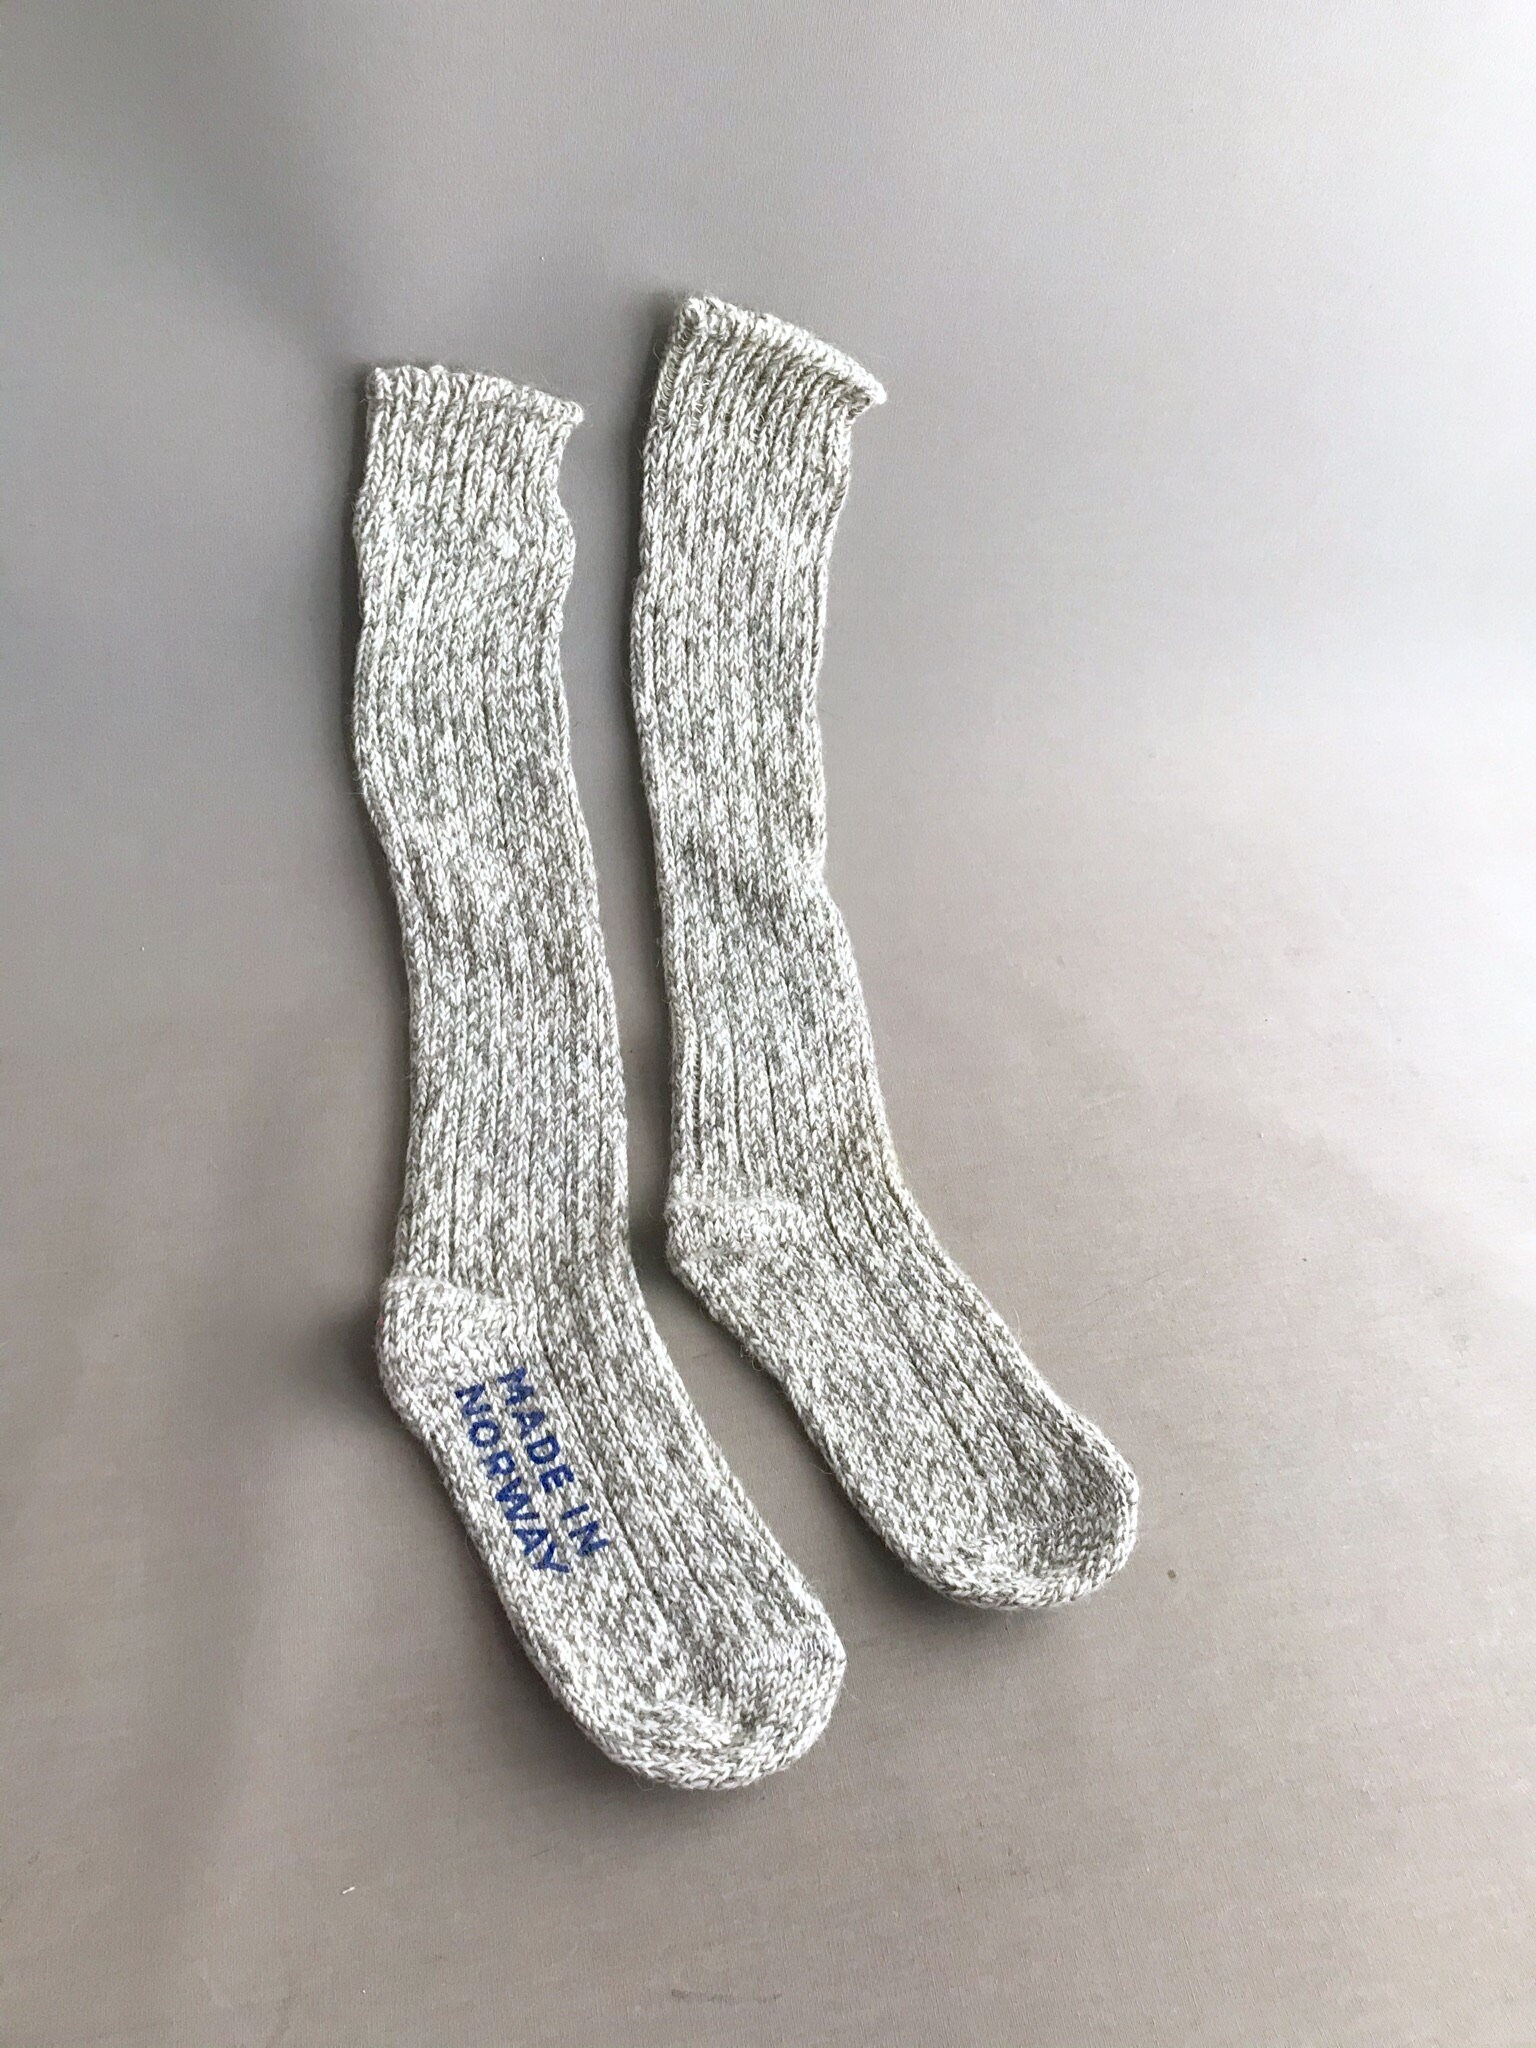 Grey Marl Ribbed Long Wool Socks 90s Grunge Style. Made in - Etsy UK